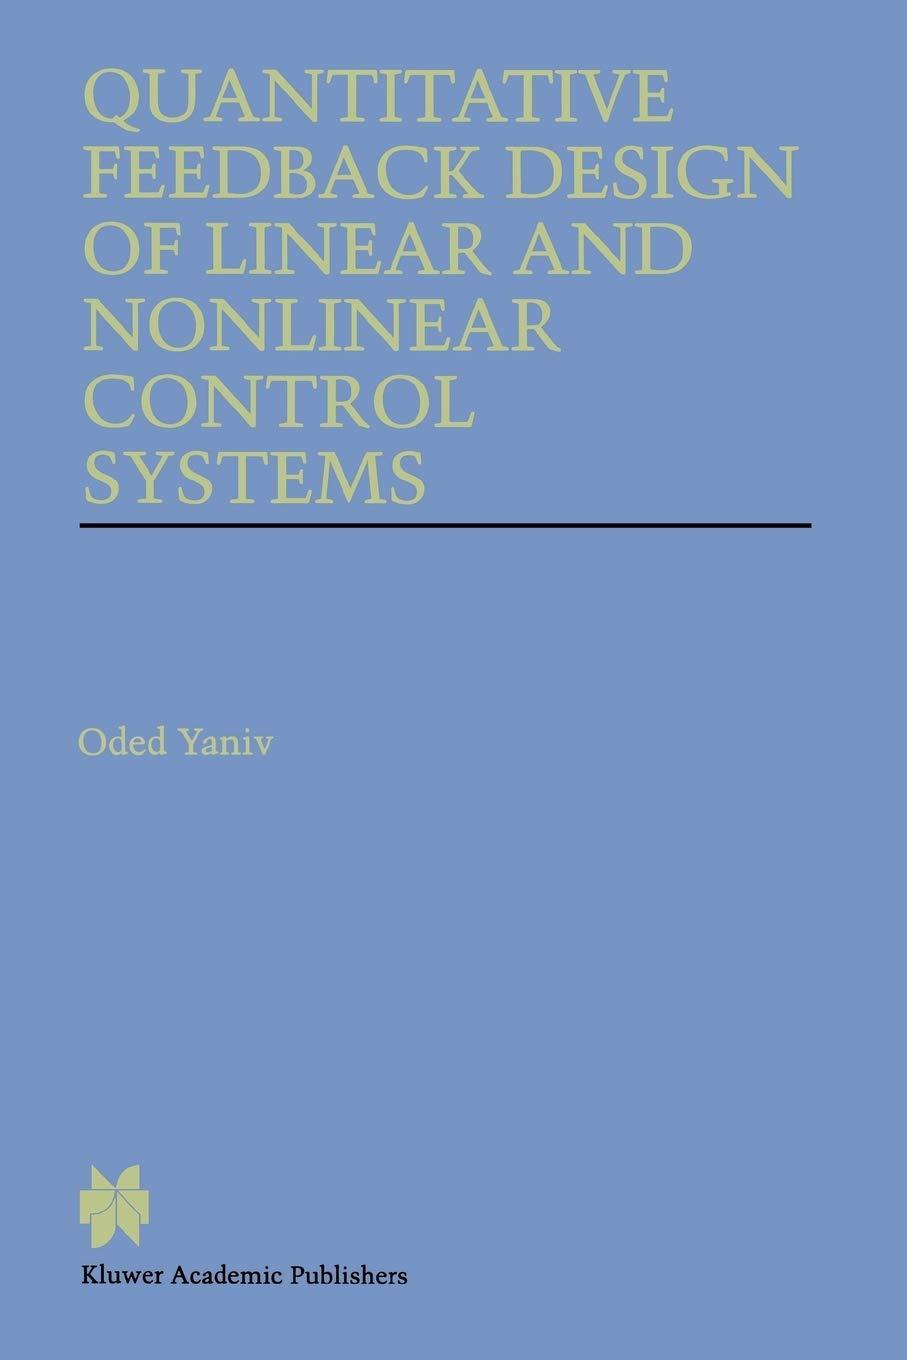 quantitative feedback design of linear and nonlinear control systems 1999 edition oded yaniv 1441950893,